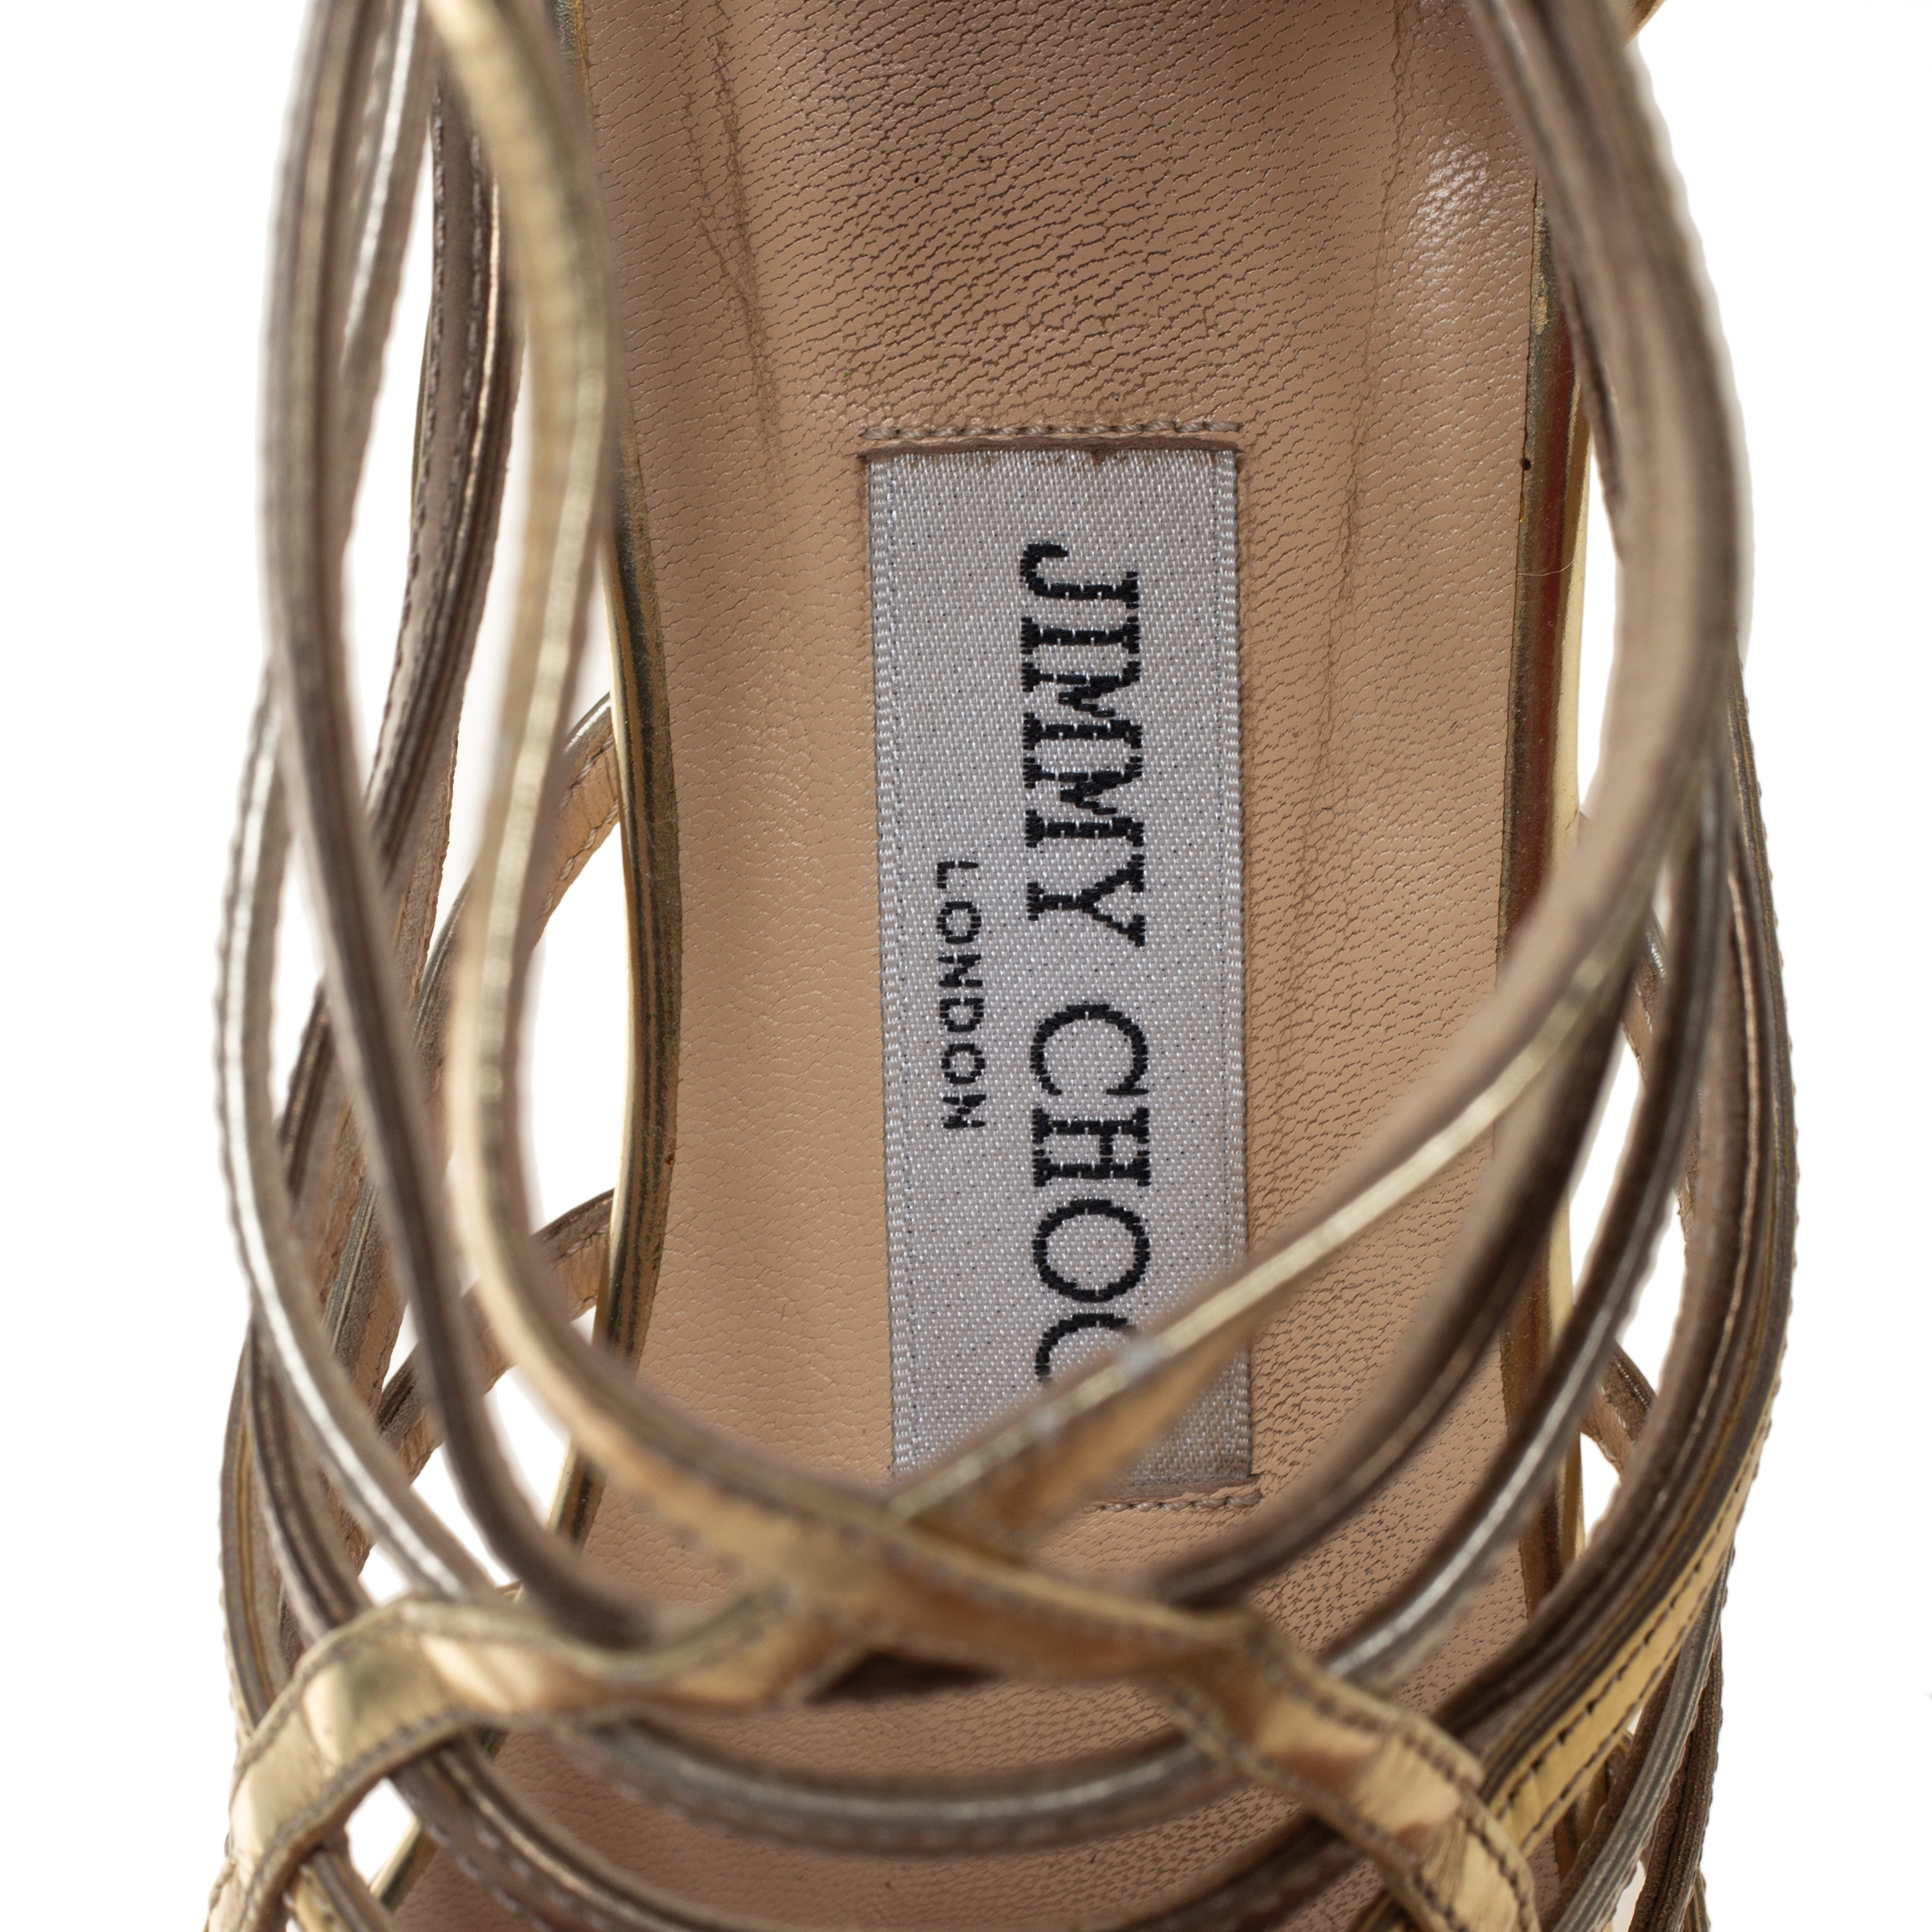 Jimmy Choo Metallic Gold/Silver Leather Gladiator Flat Sandals Size 38.5